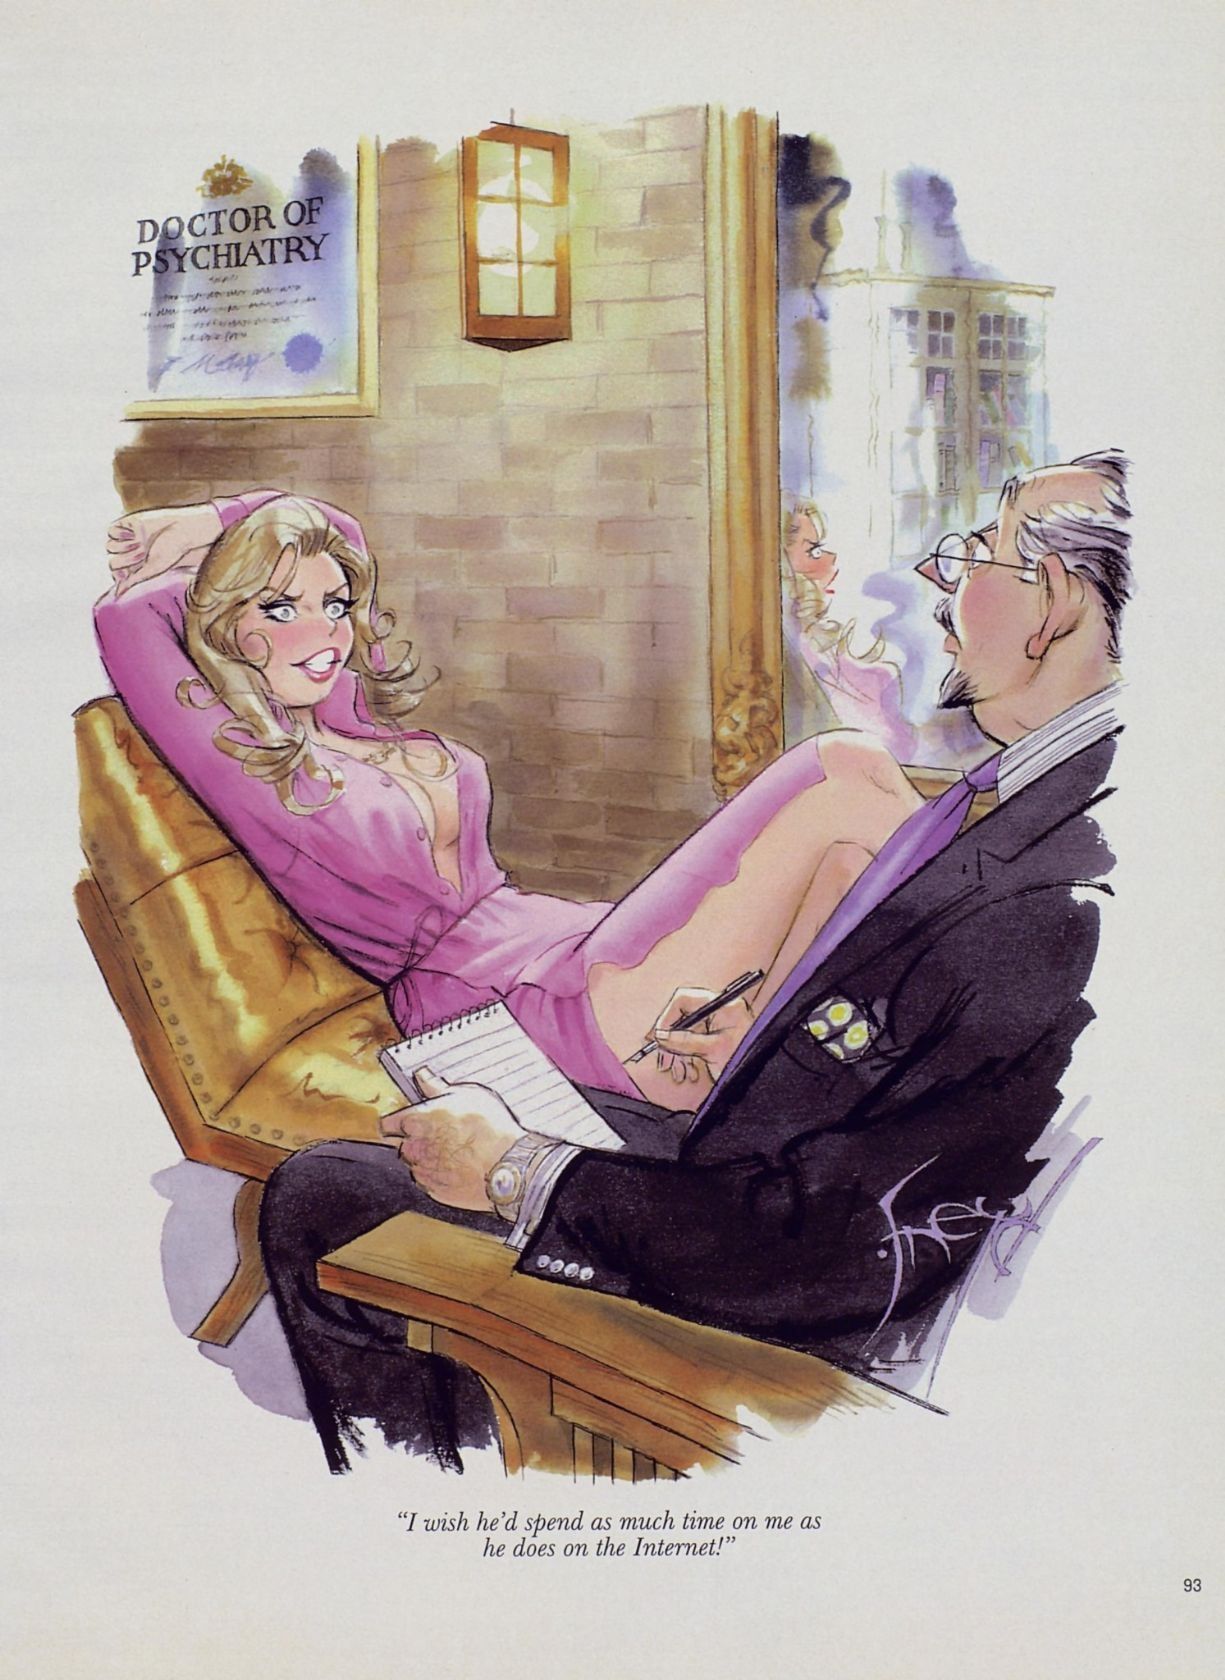 Doug Sneyd - Playboy cartoons - part 14